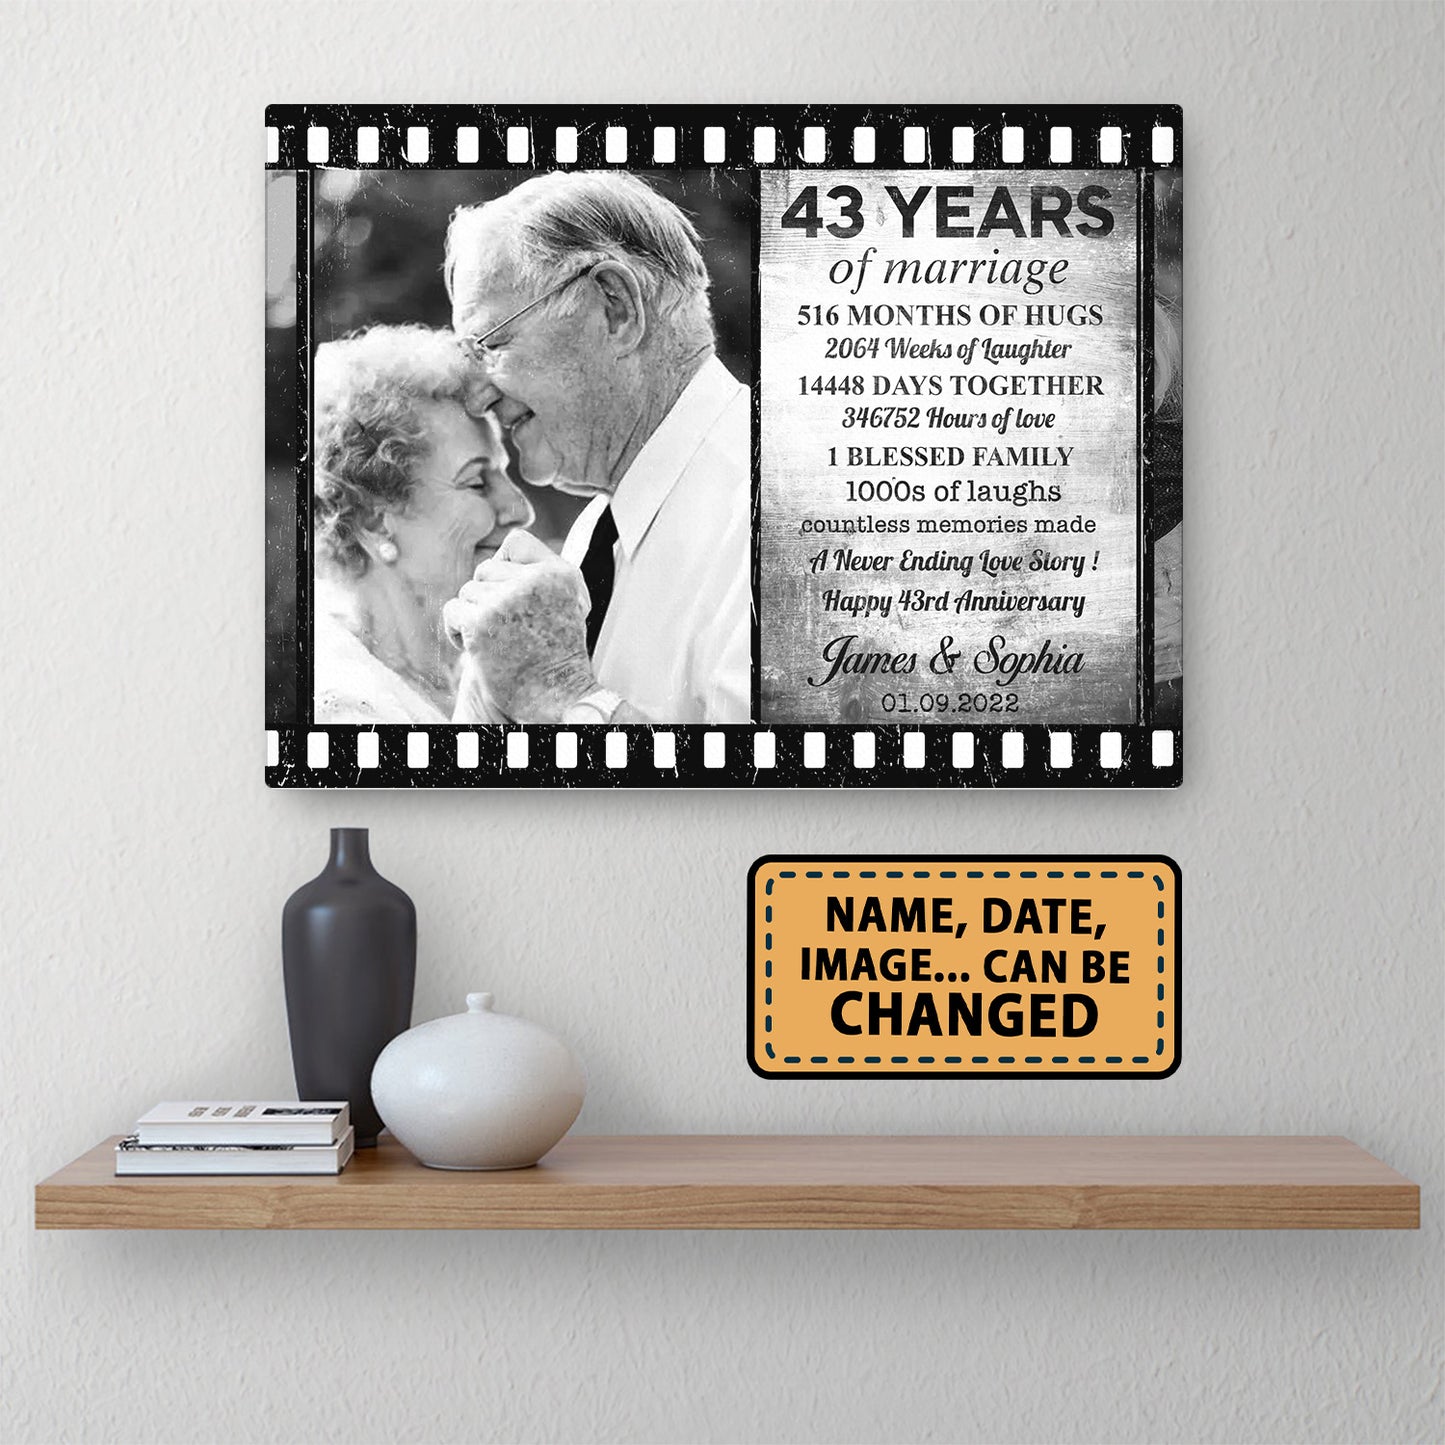 43 Years Of Marriage Film Custom Image Anniversary Canvas